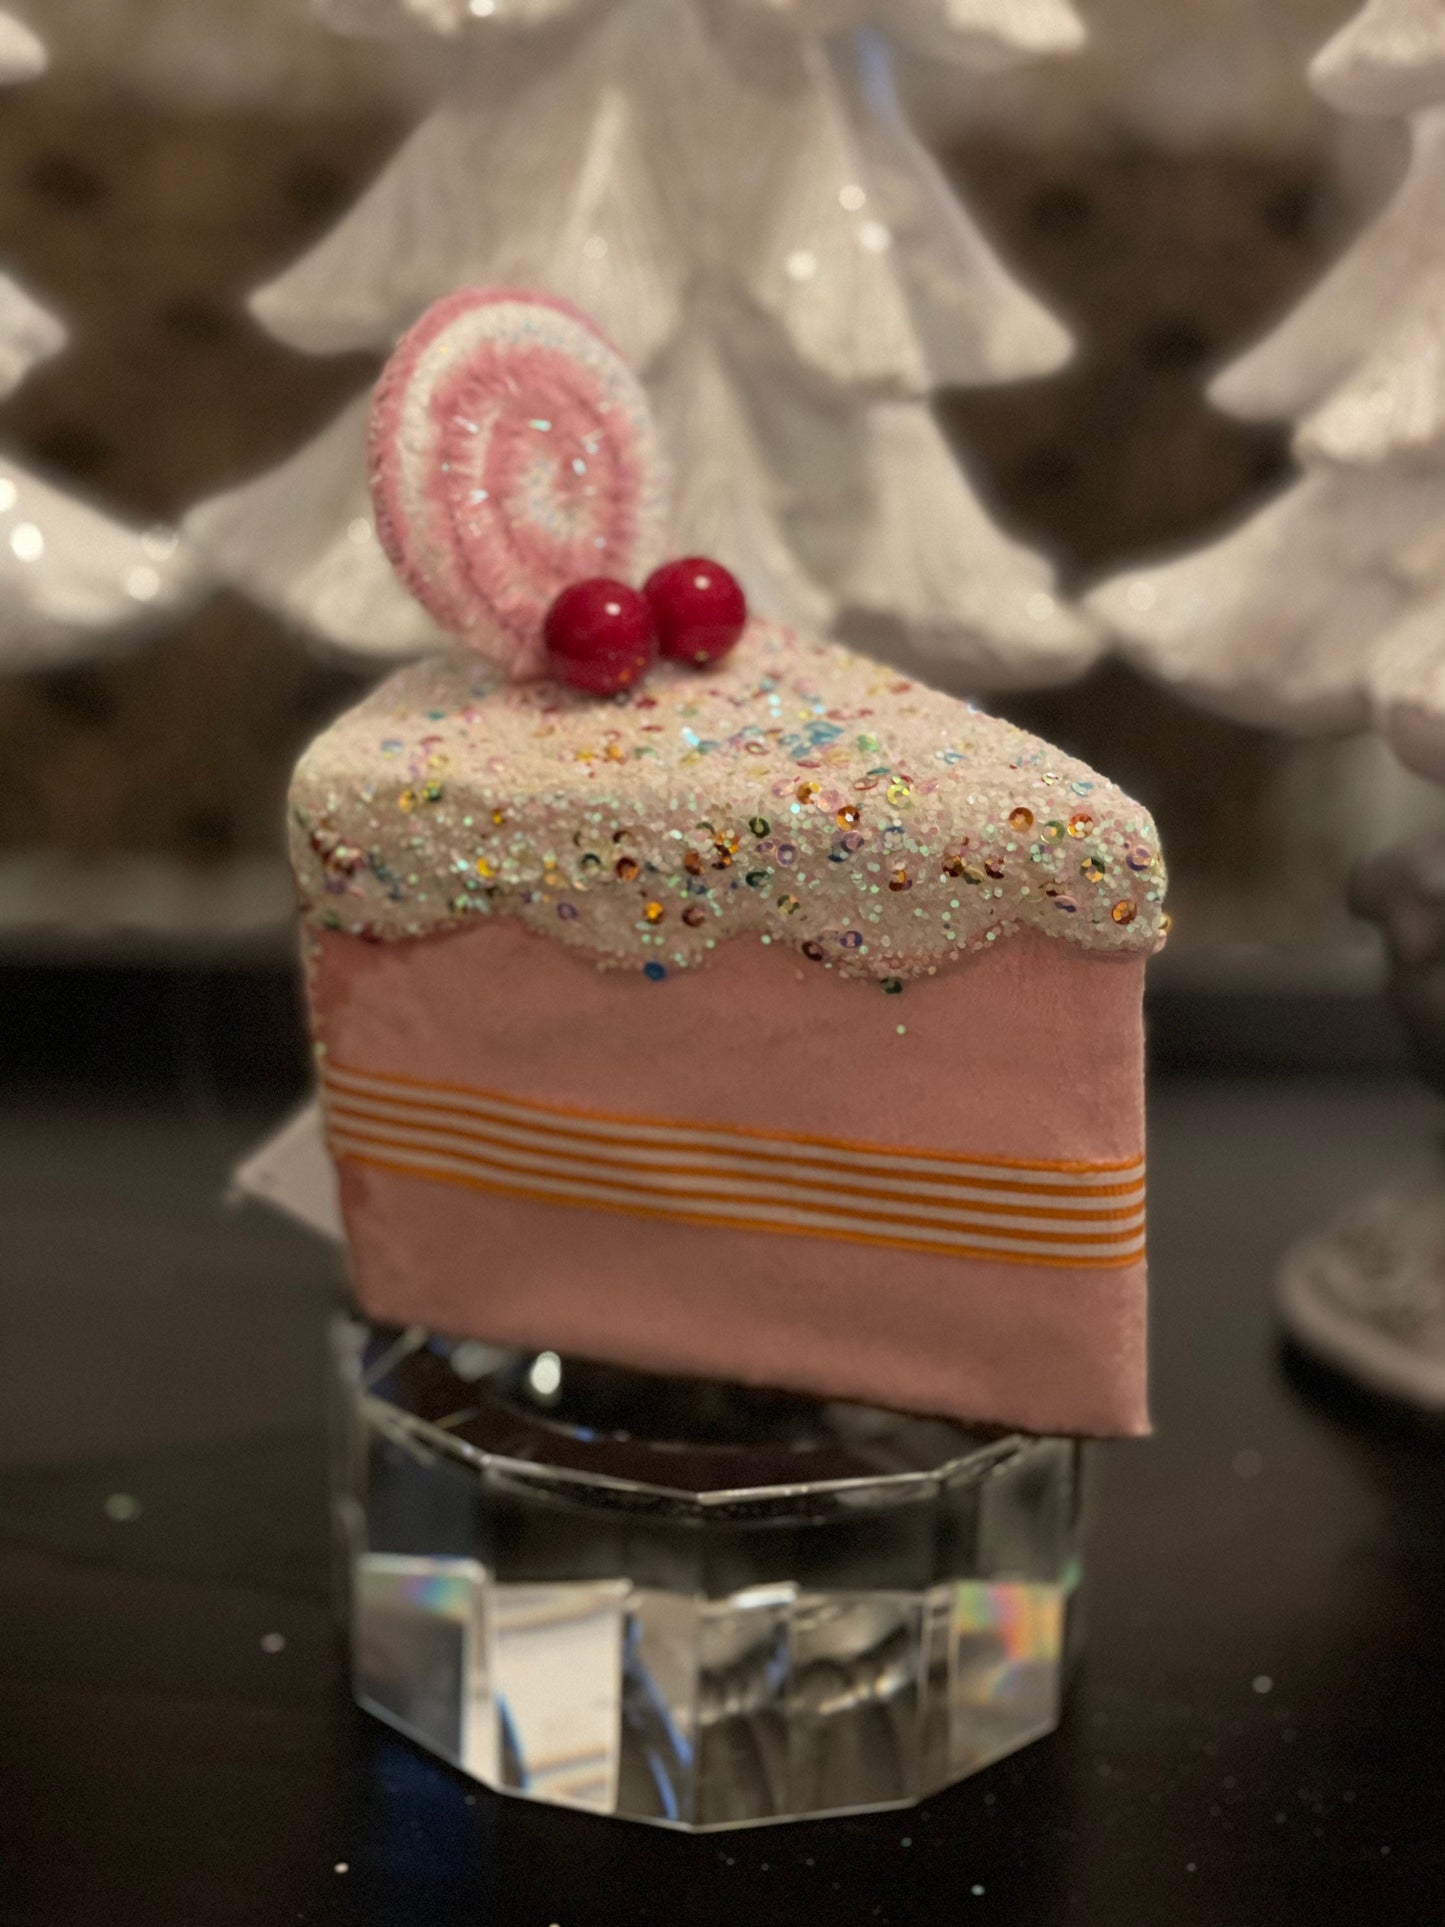 6" Candy cake slice soft pink